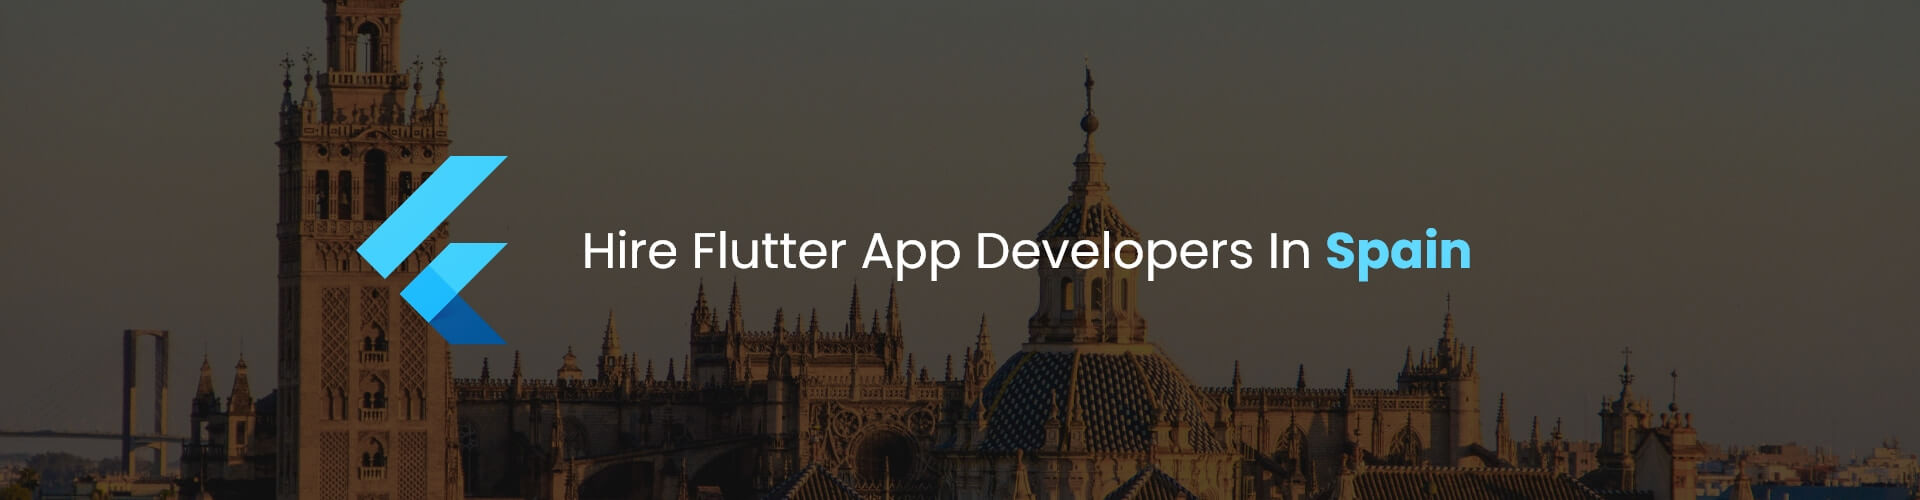 hire flutter app developers in spain